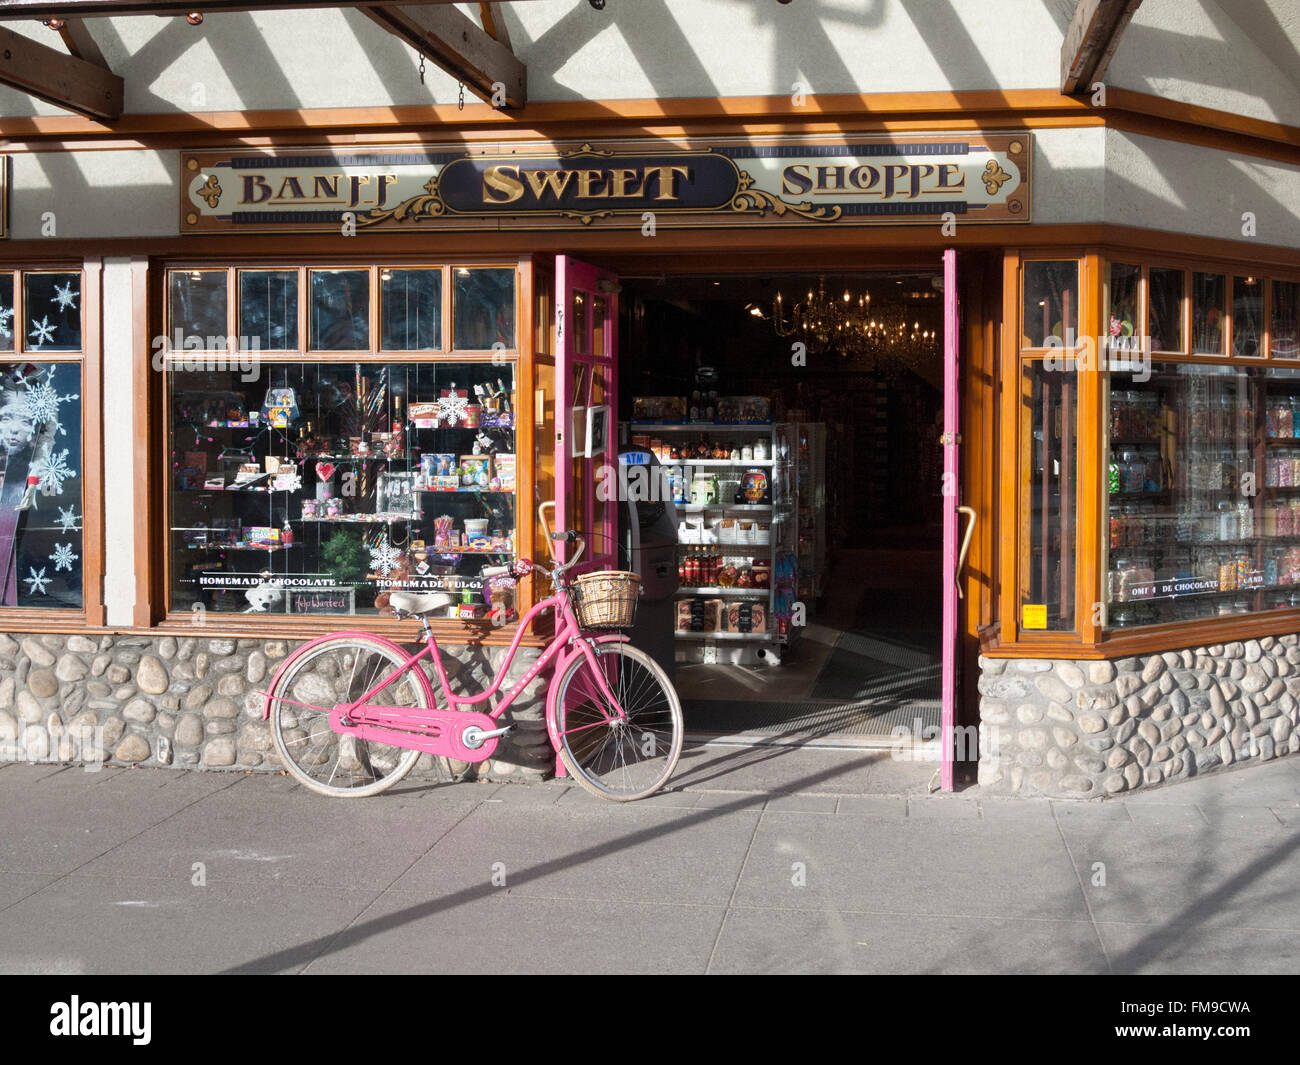 Banff Sweet Shop in Banff Avenue Banff Canada Stock Photo